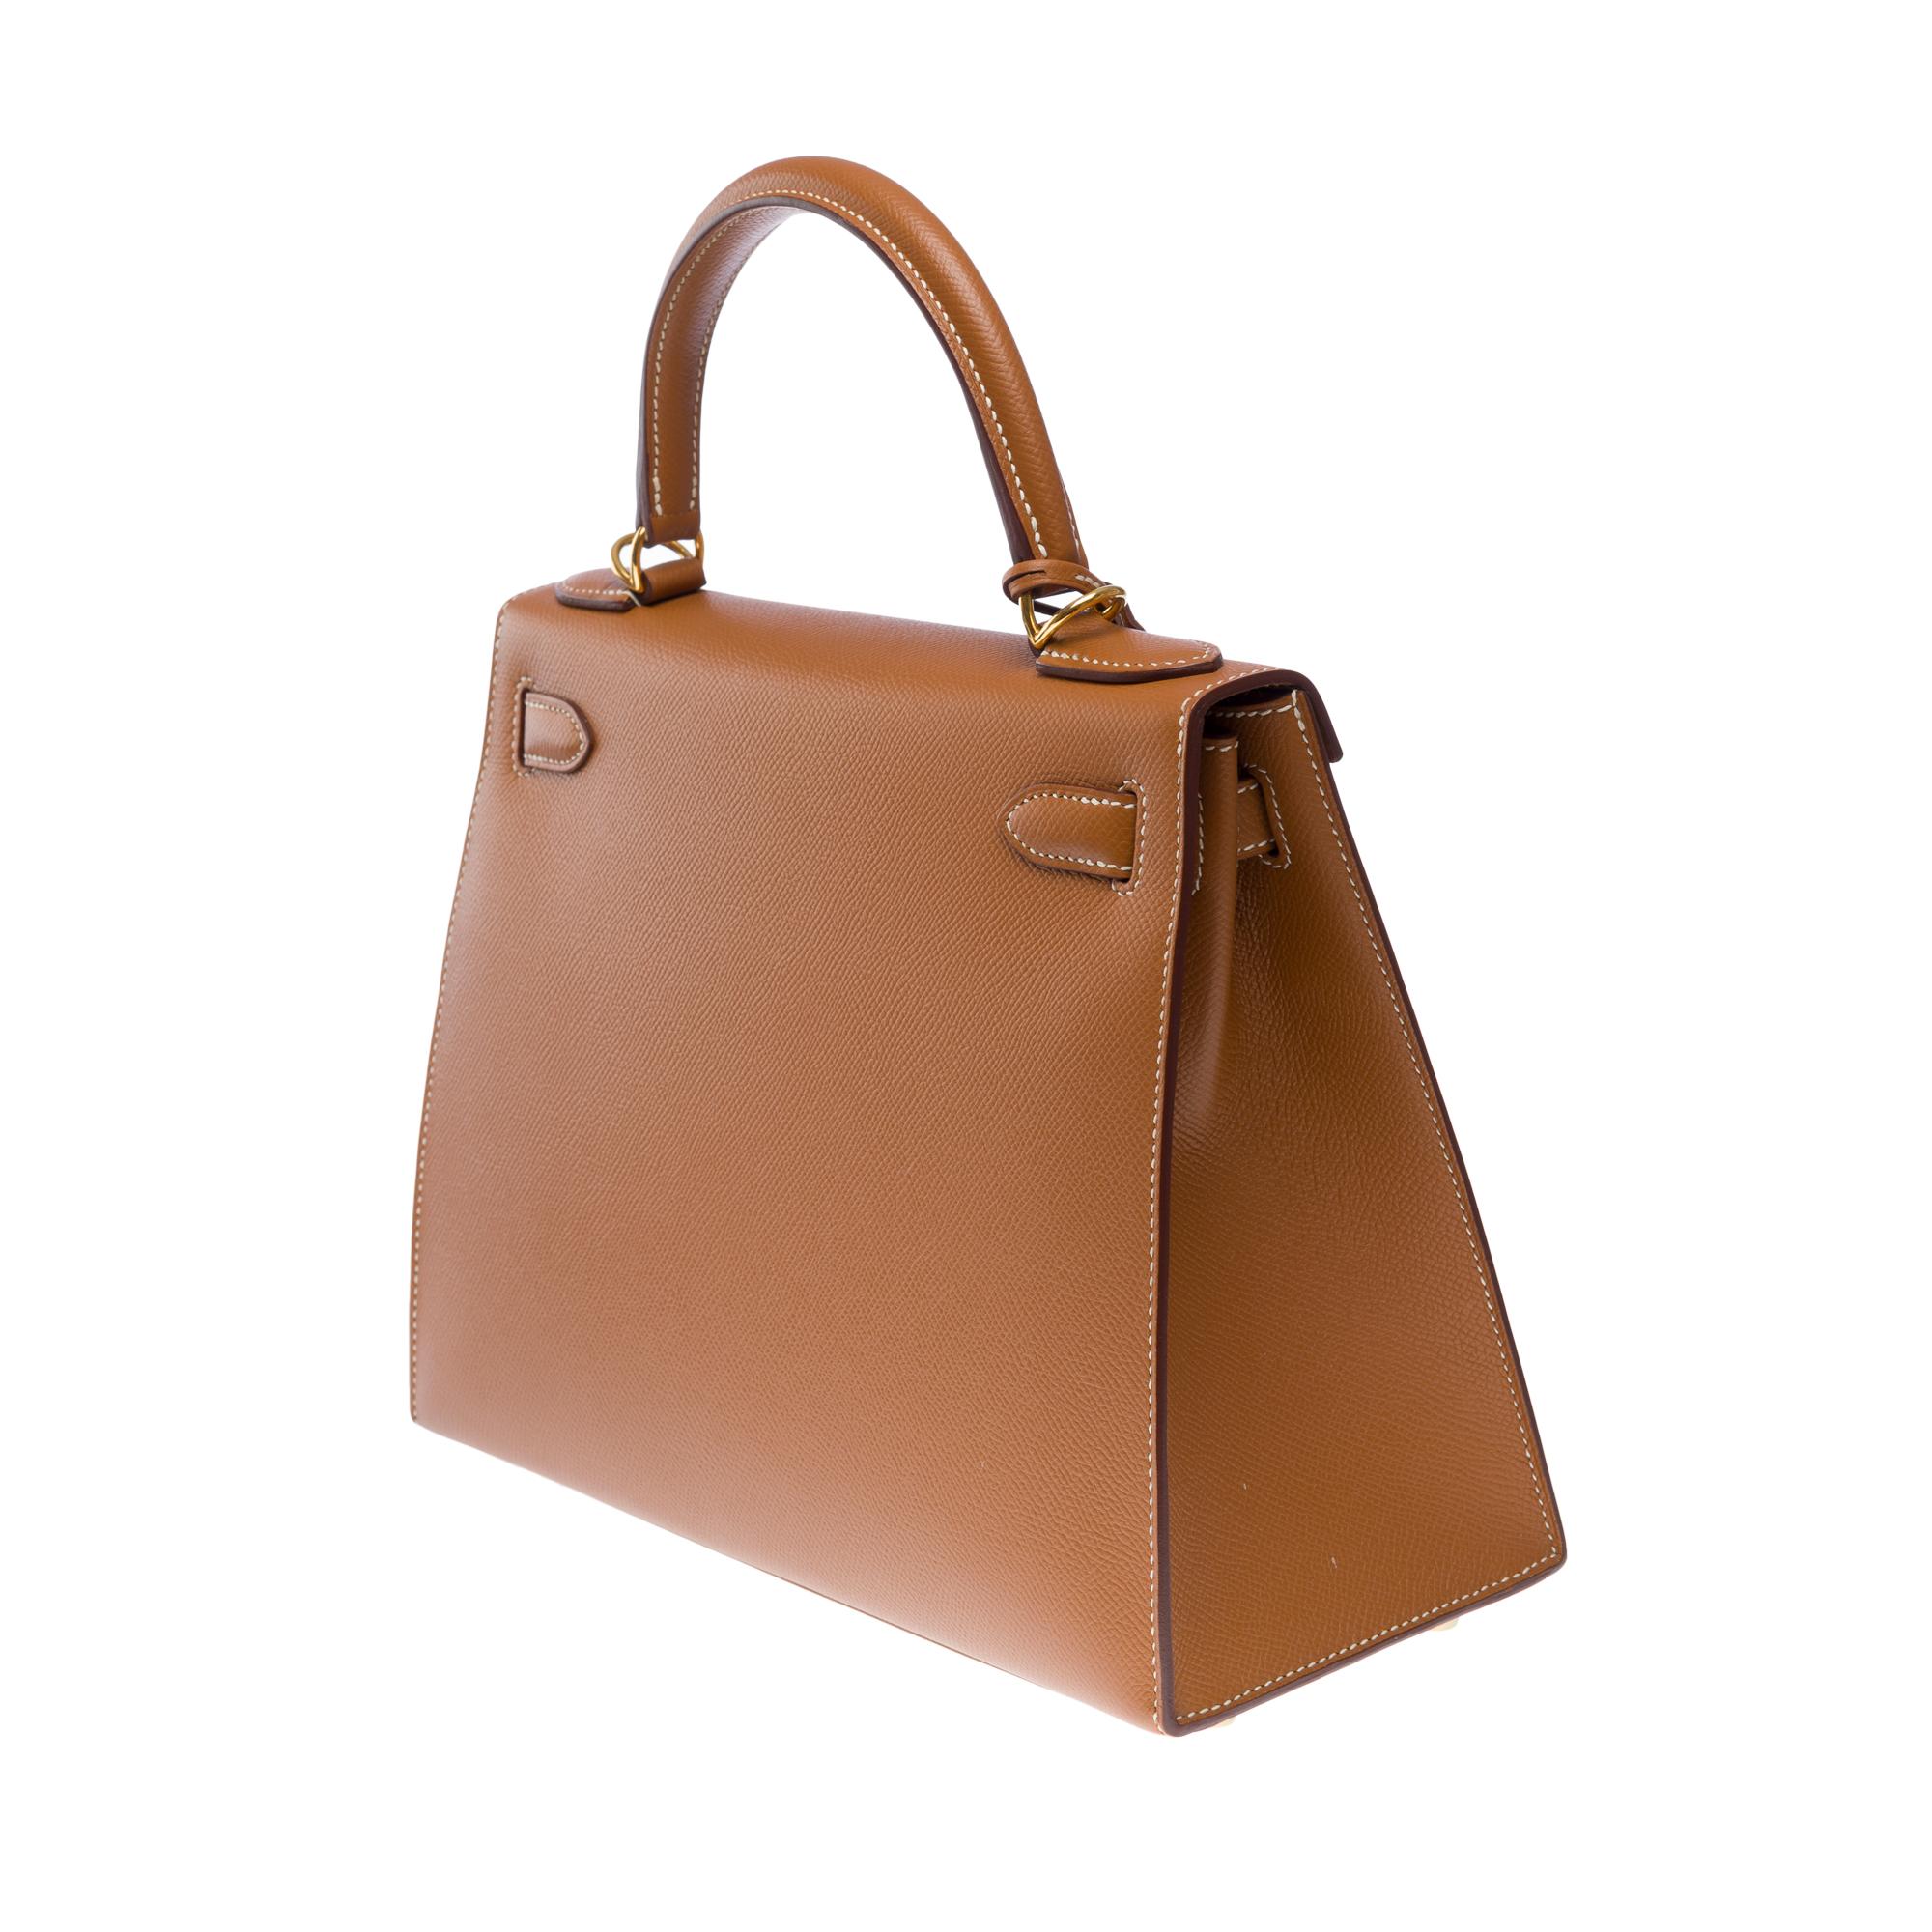 Amazing Hermès Kelly 28 sellier handbag strap in Camel/Gold Epsom leather, GHW 2